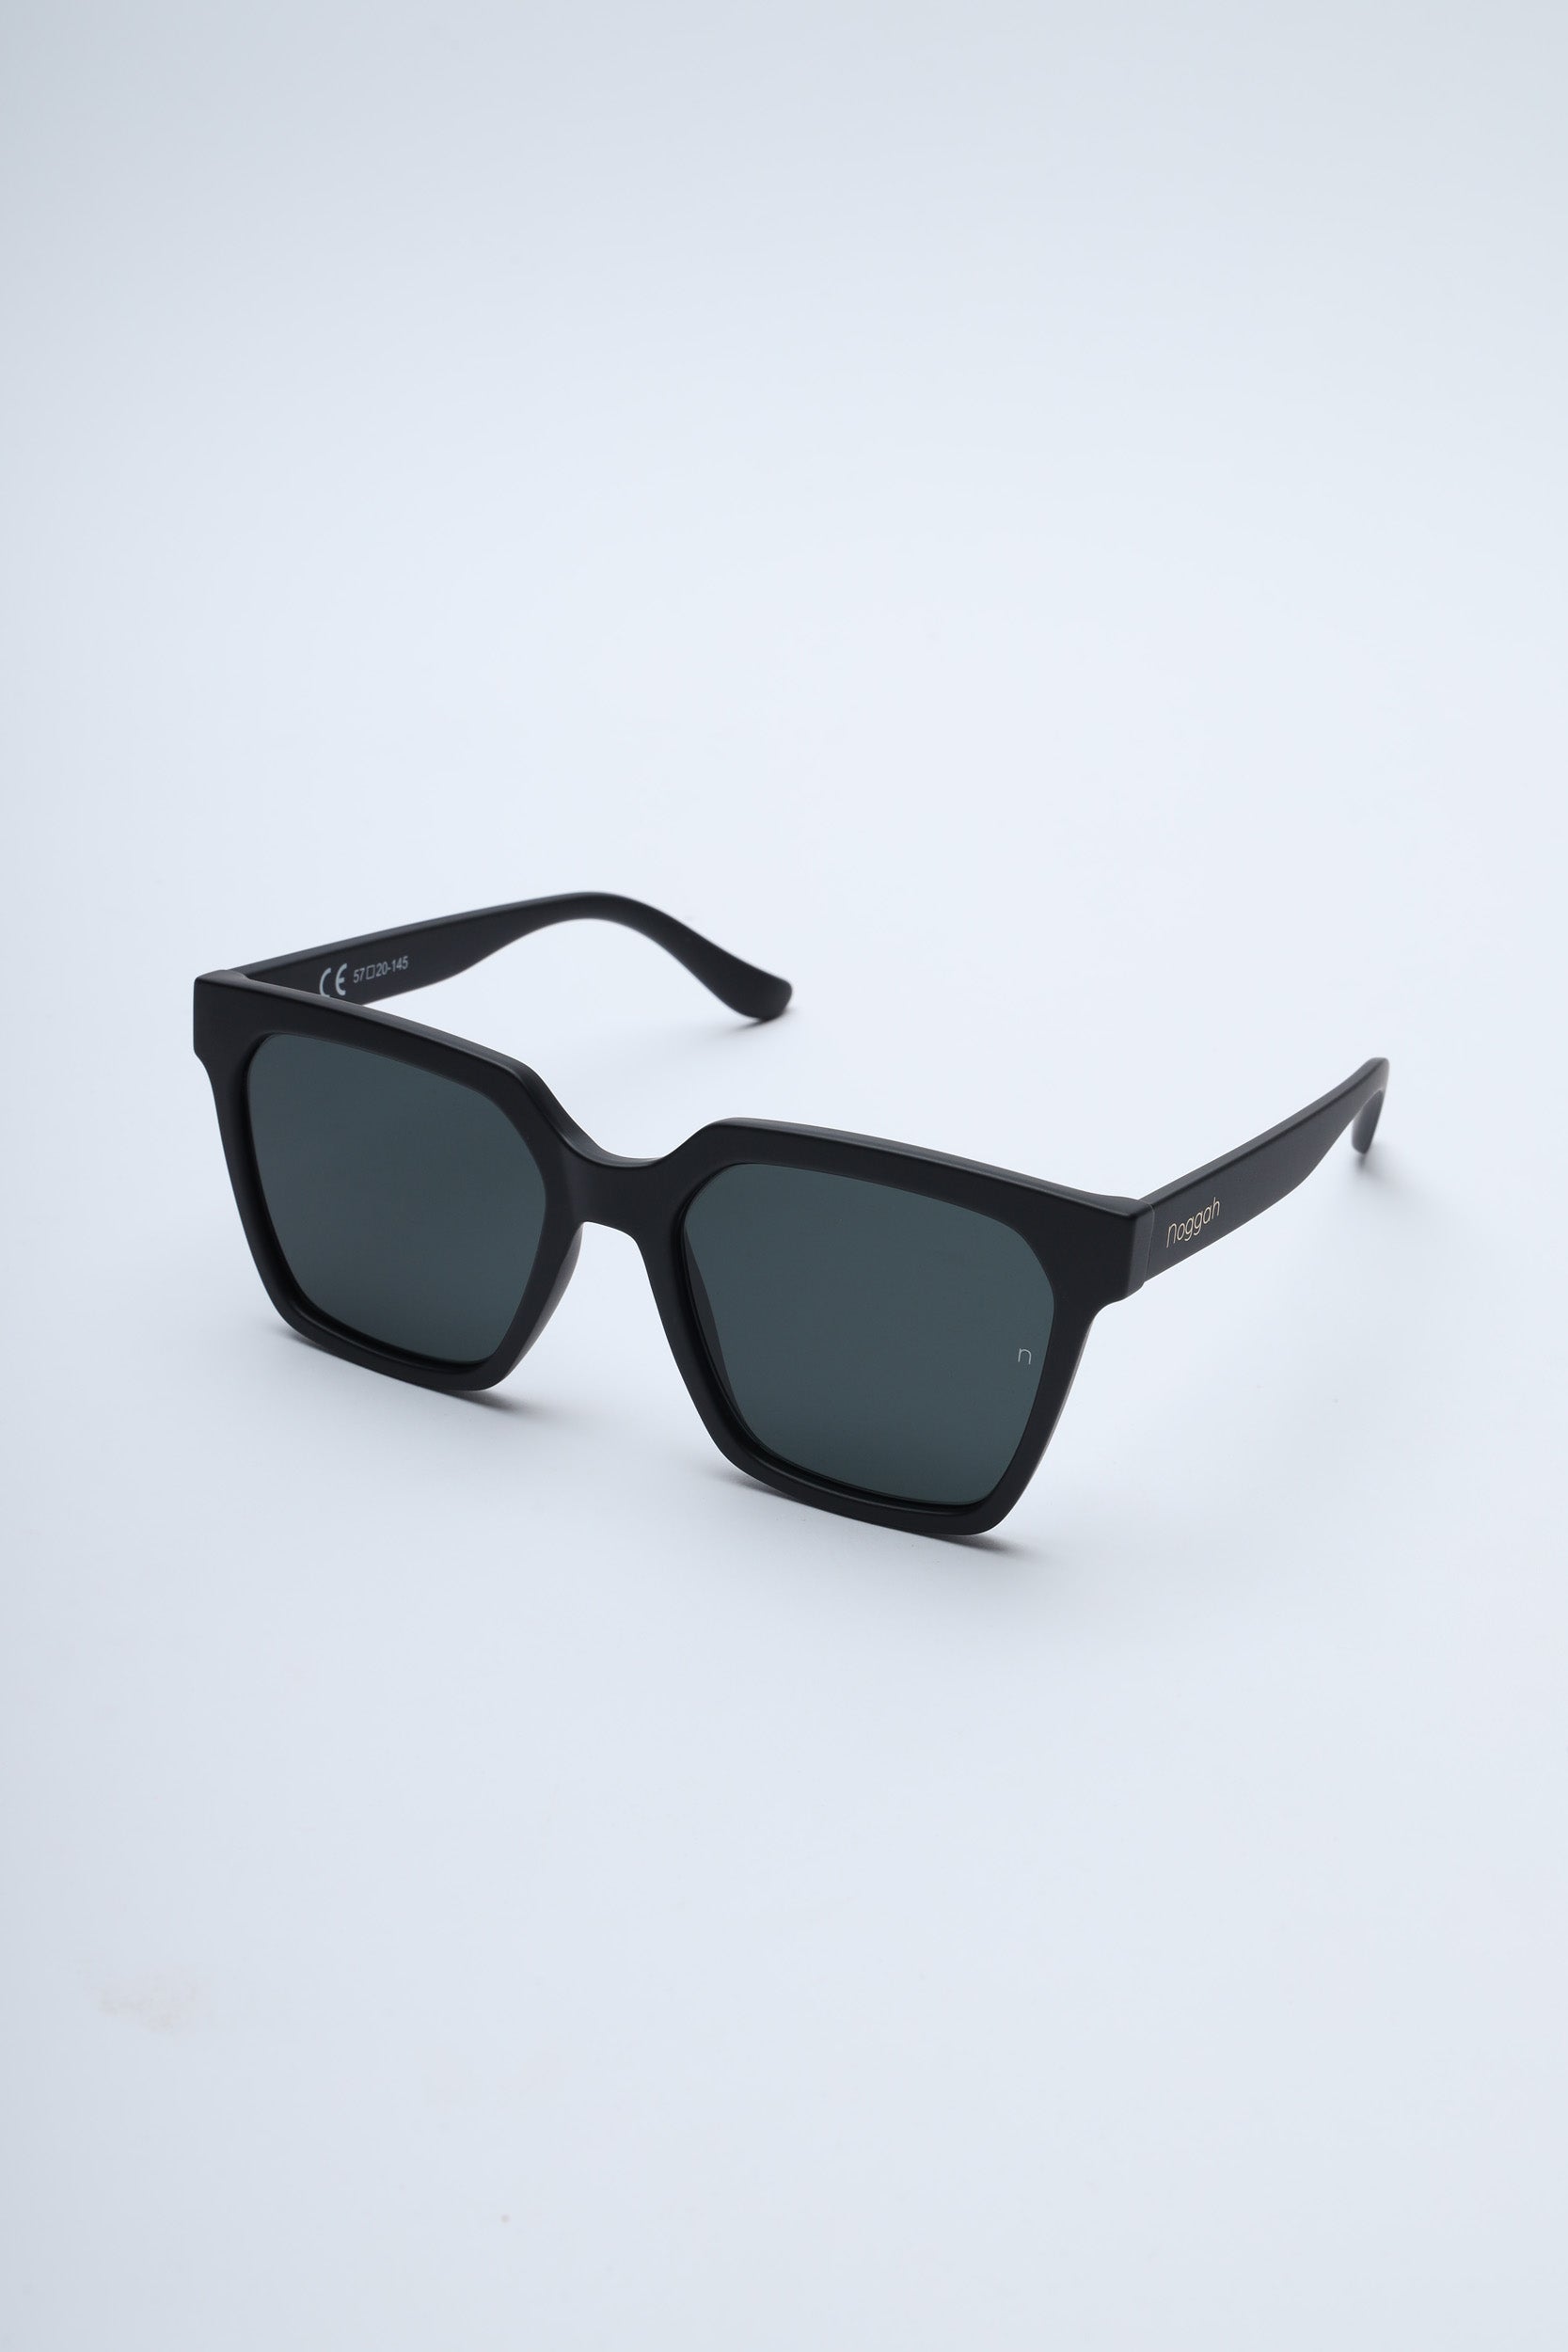 Polarized sunglasses: technology and advantages | eyerim.com